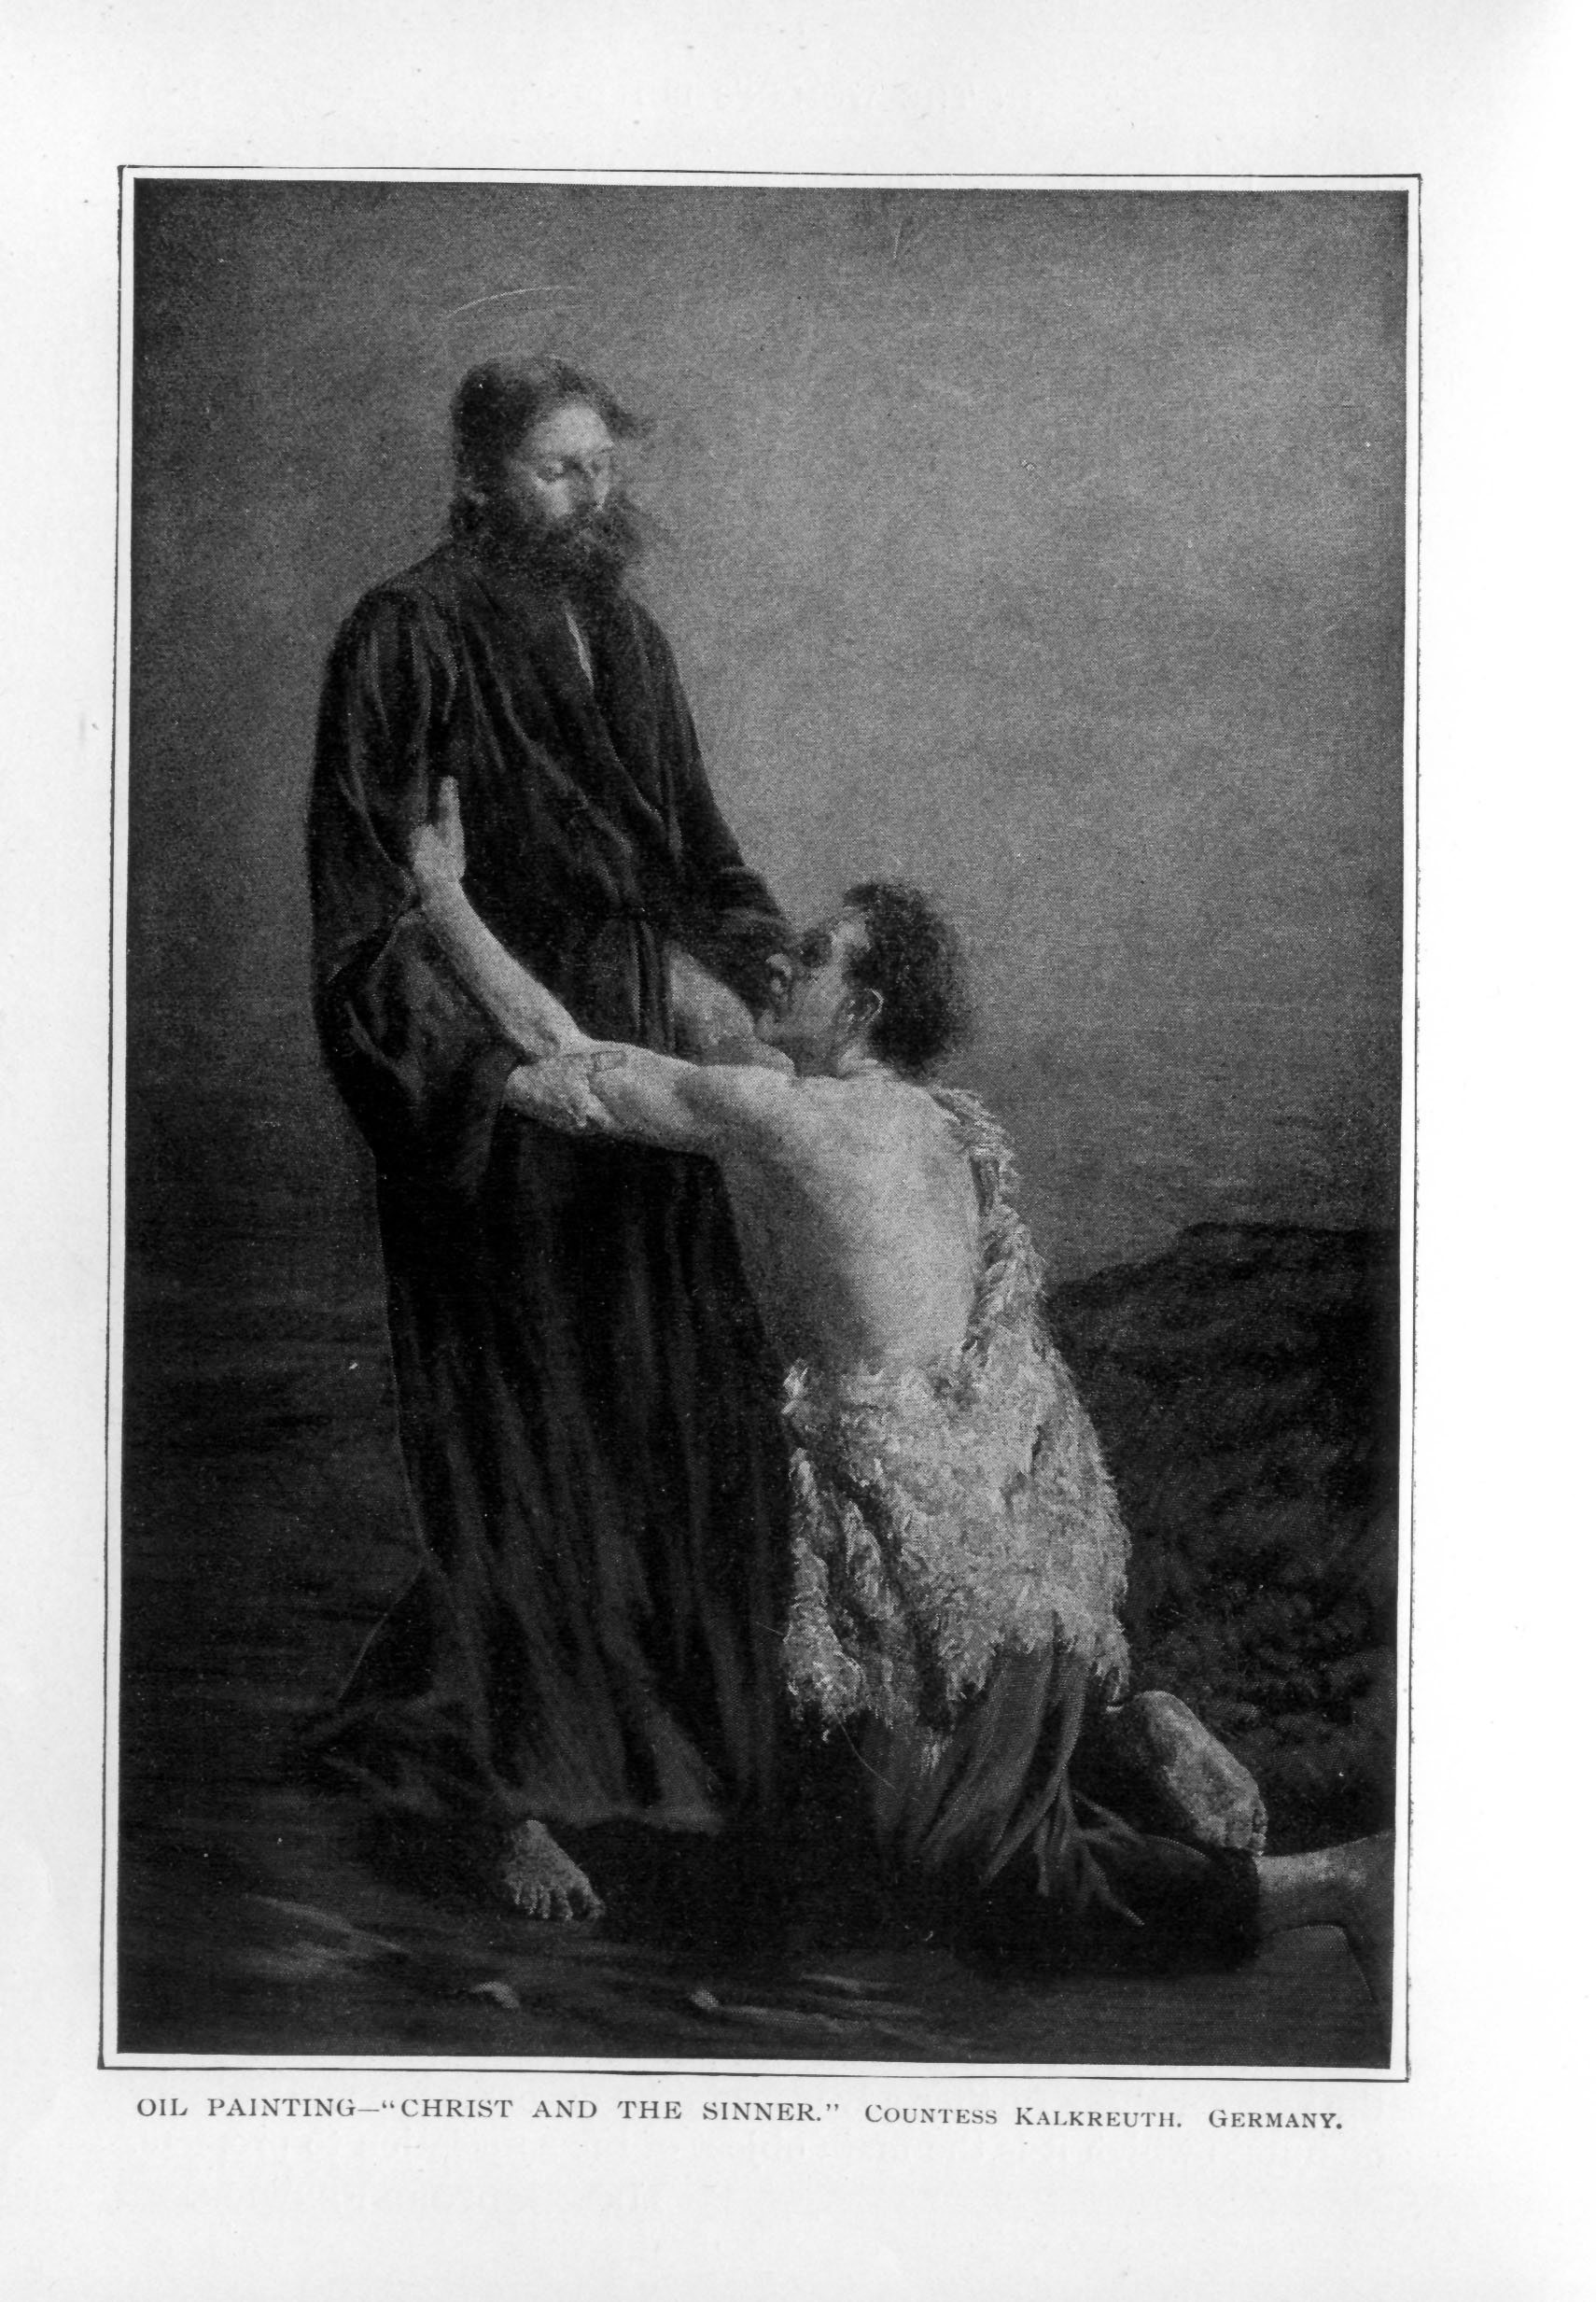 kneeling man beseeching Christ standing before him